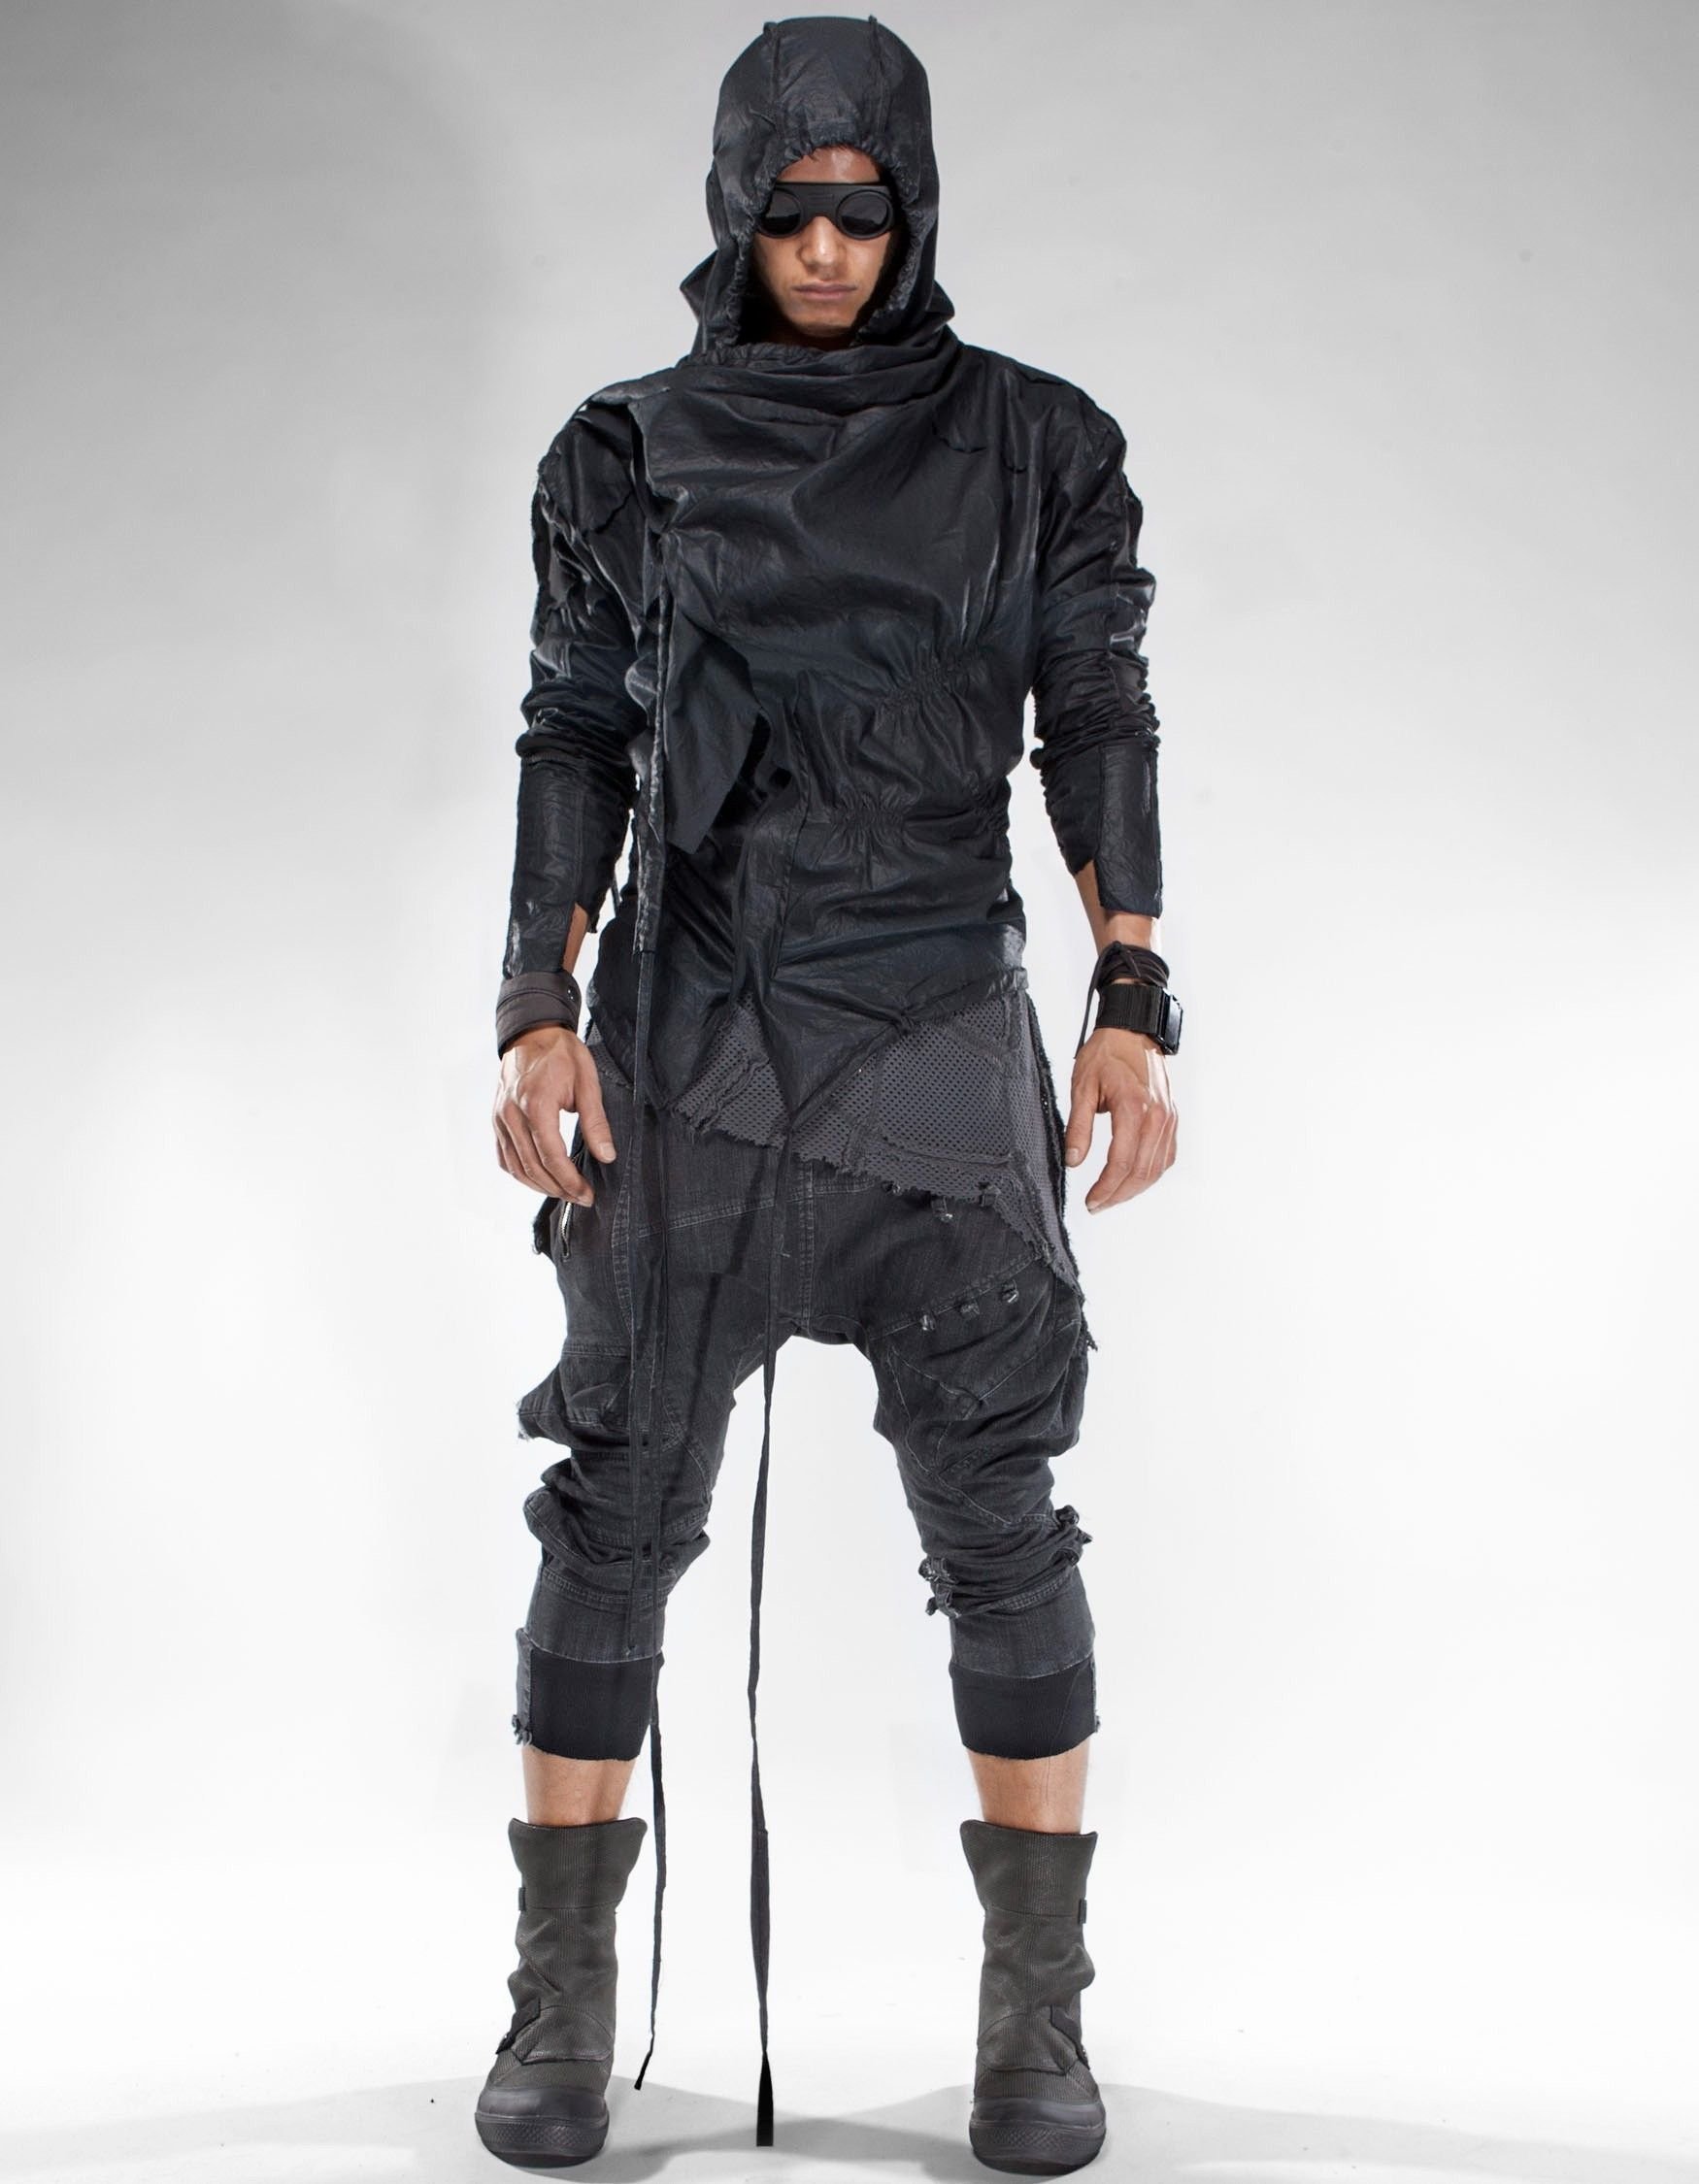 Cyberpunk clothes style фото 2